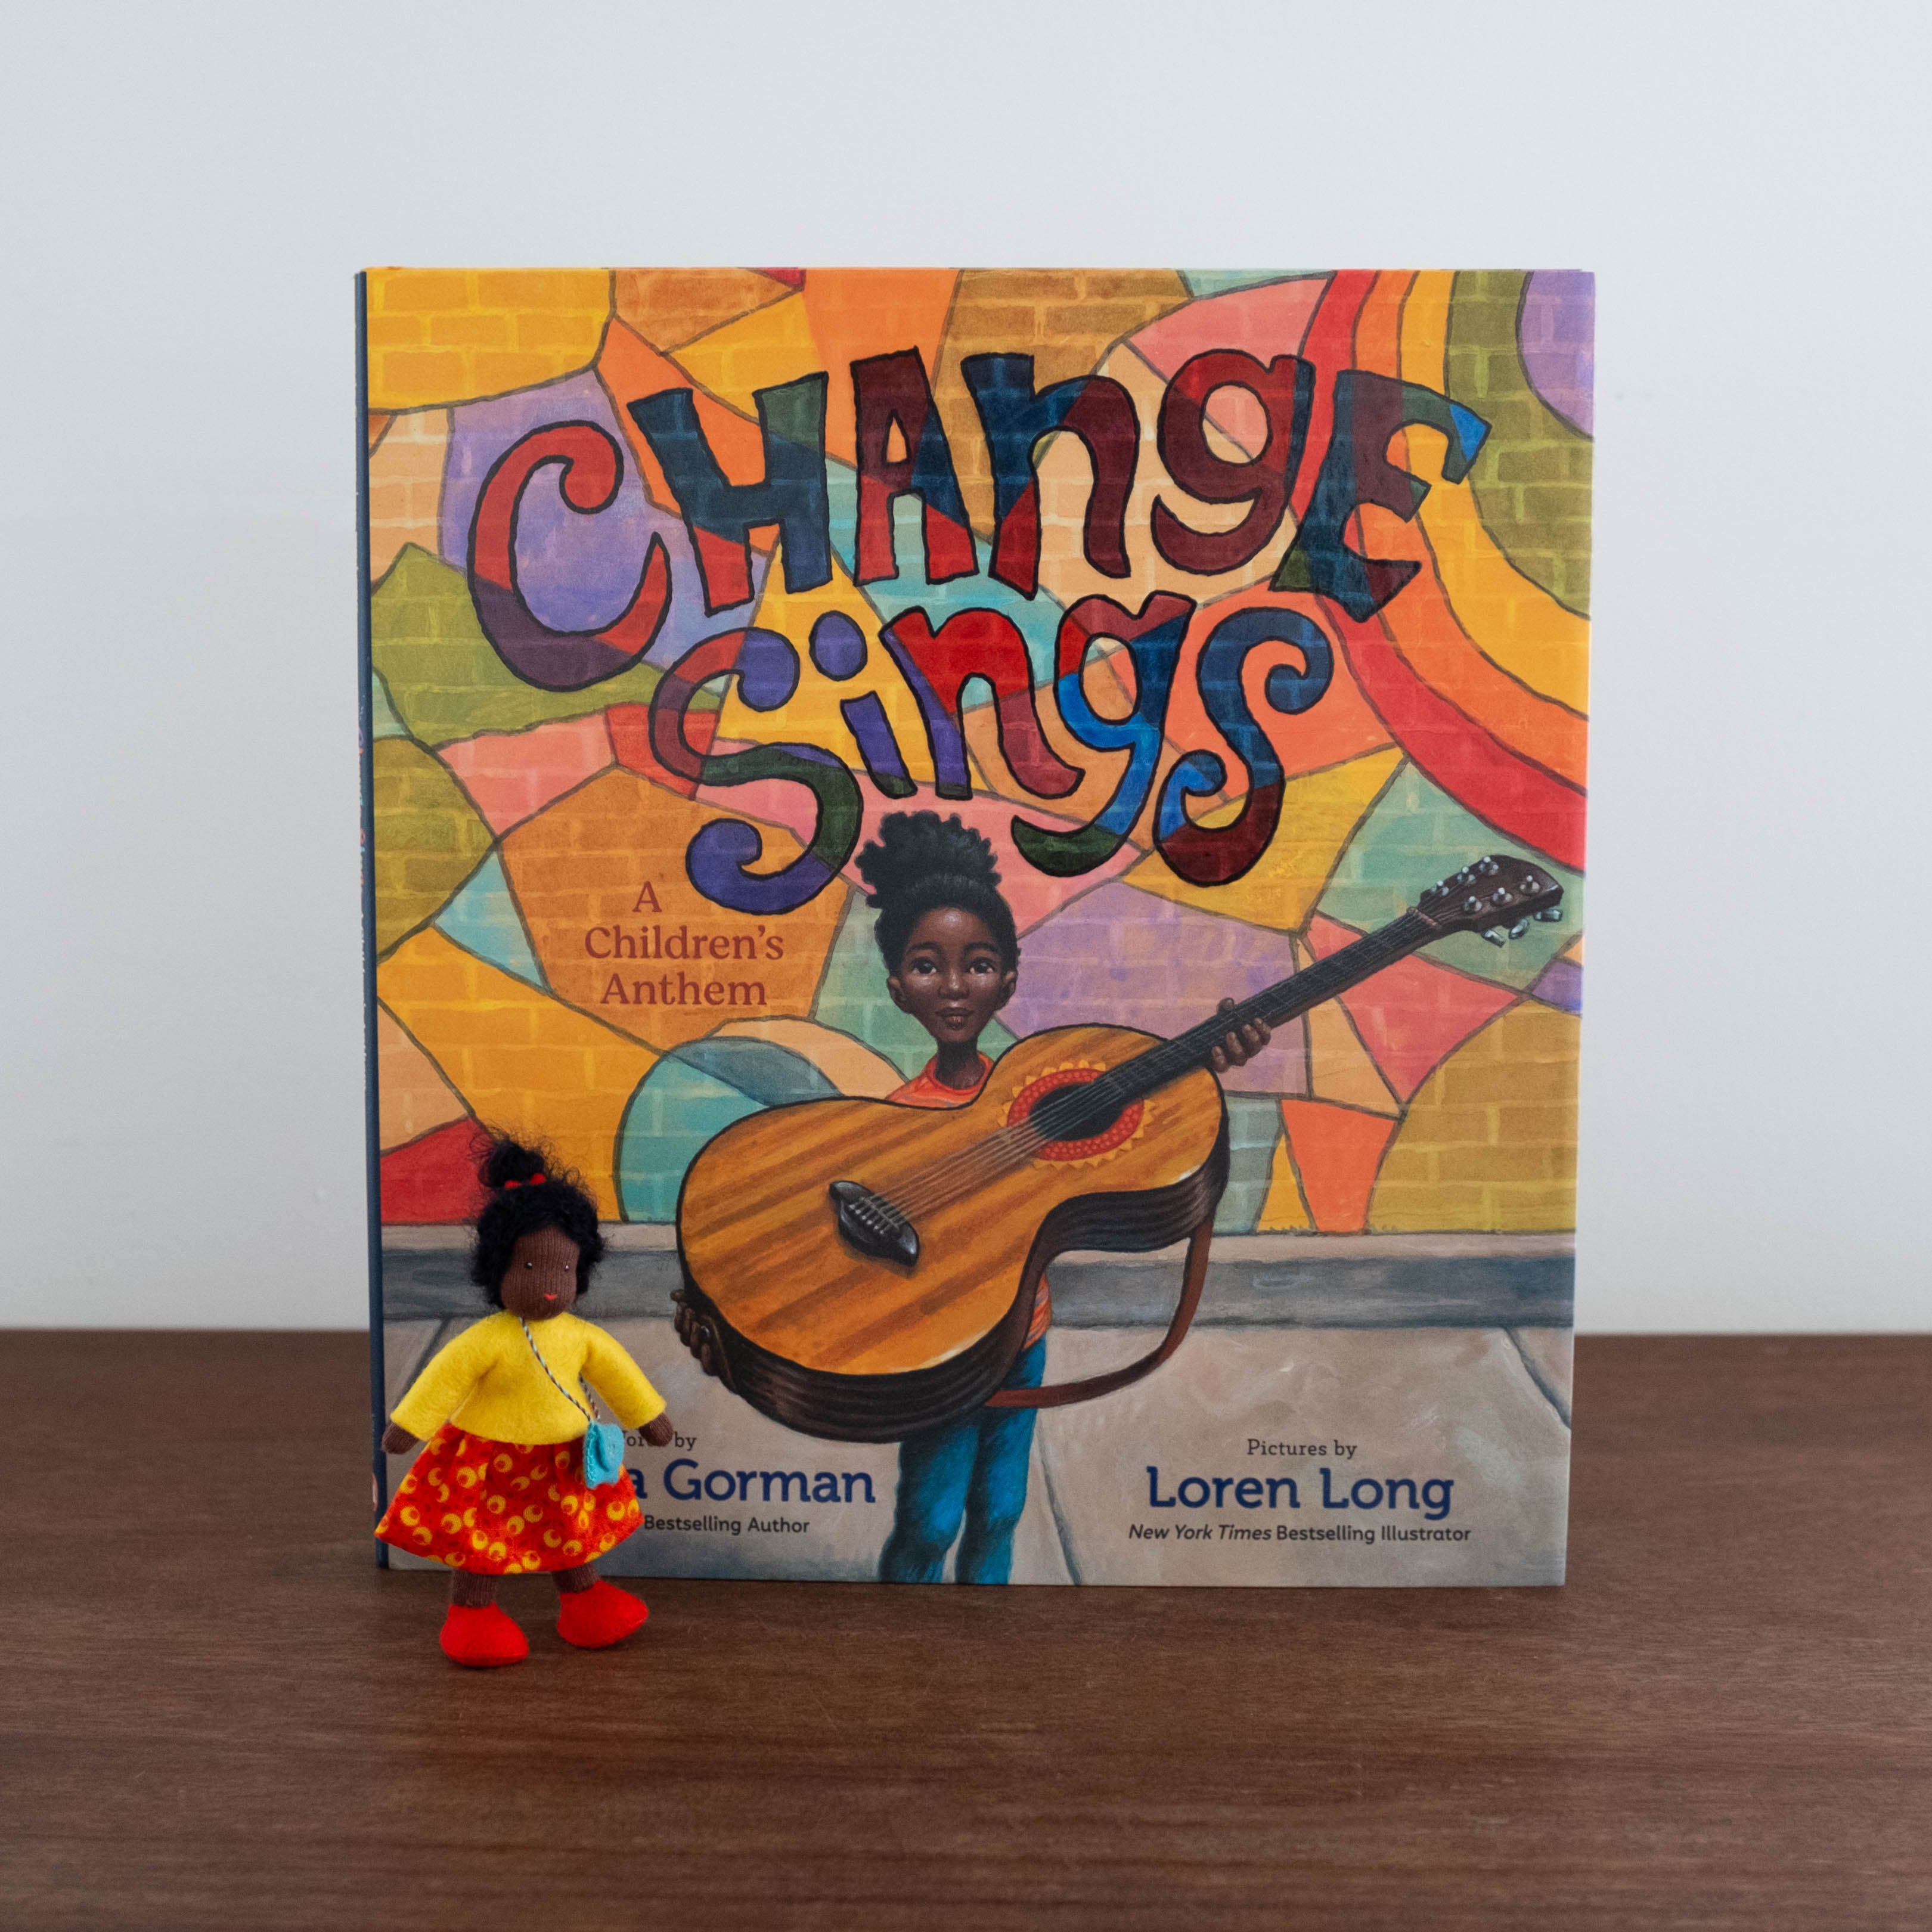 Change Sings by Amanda Gorman Book